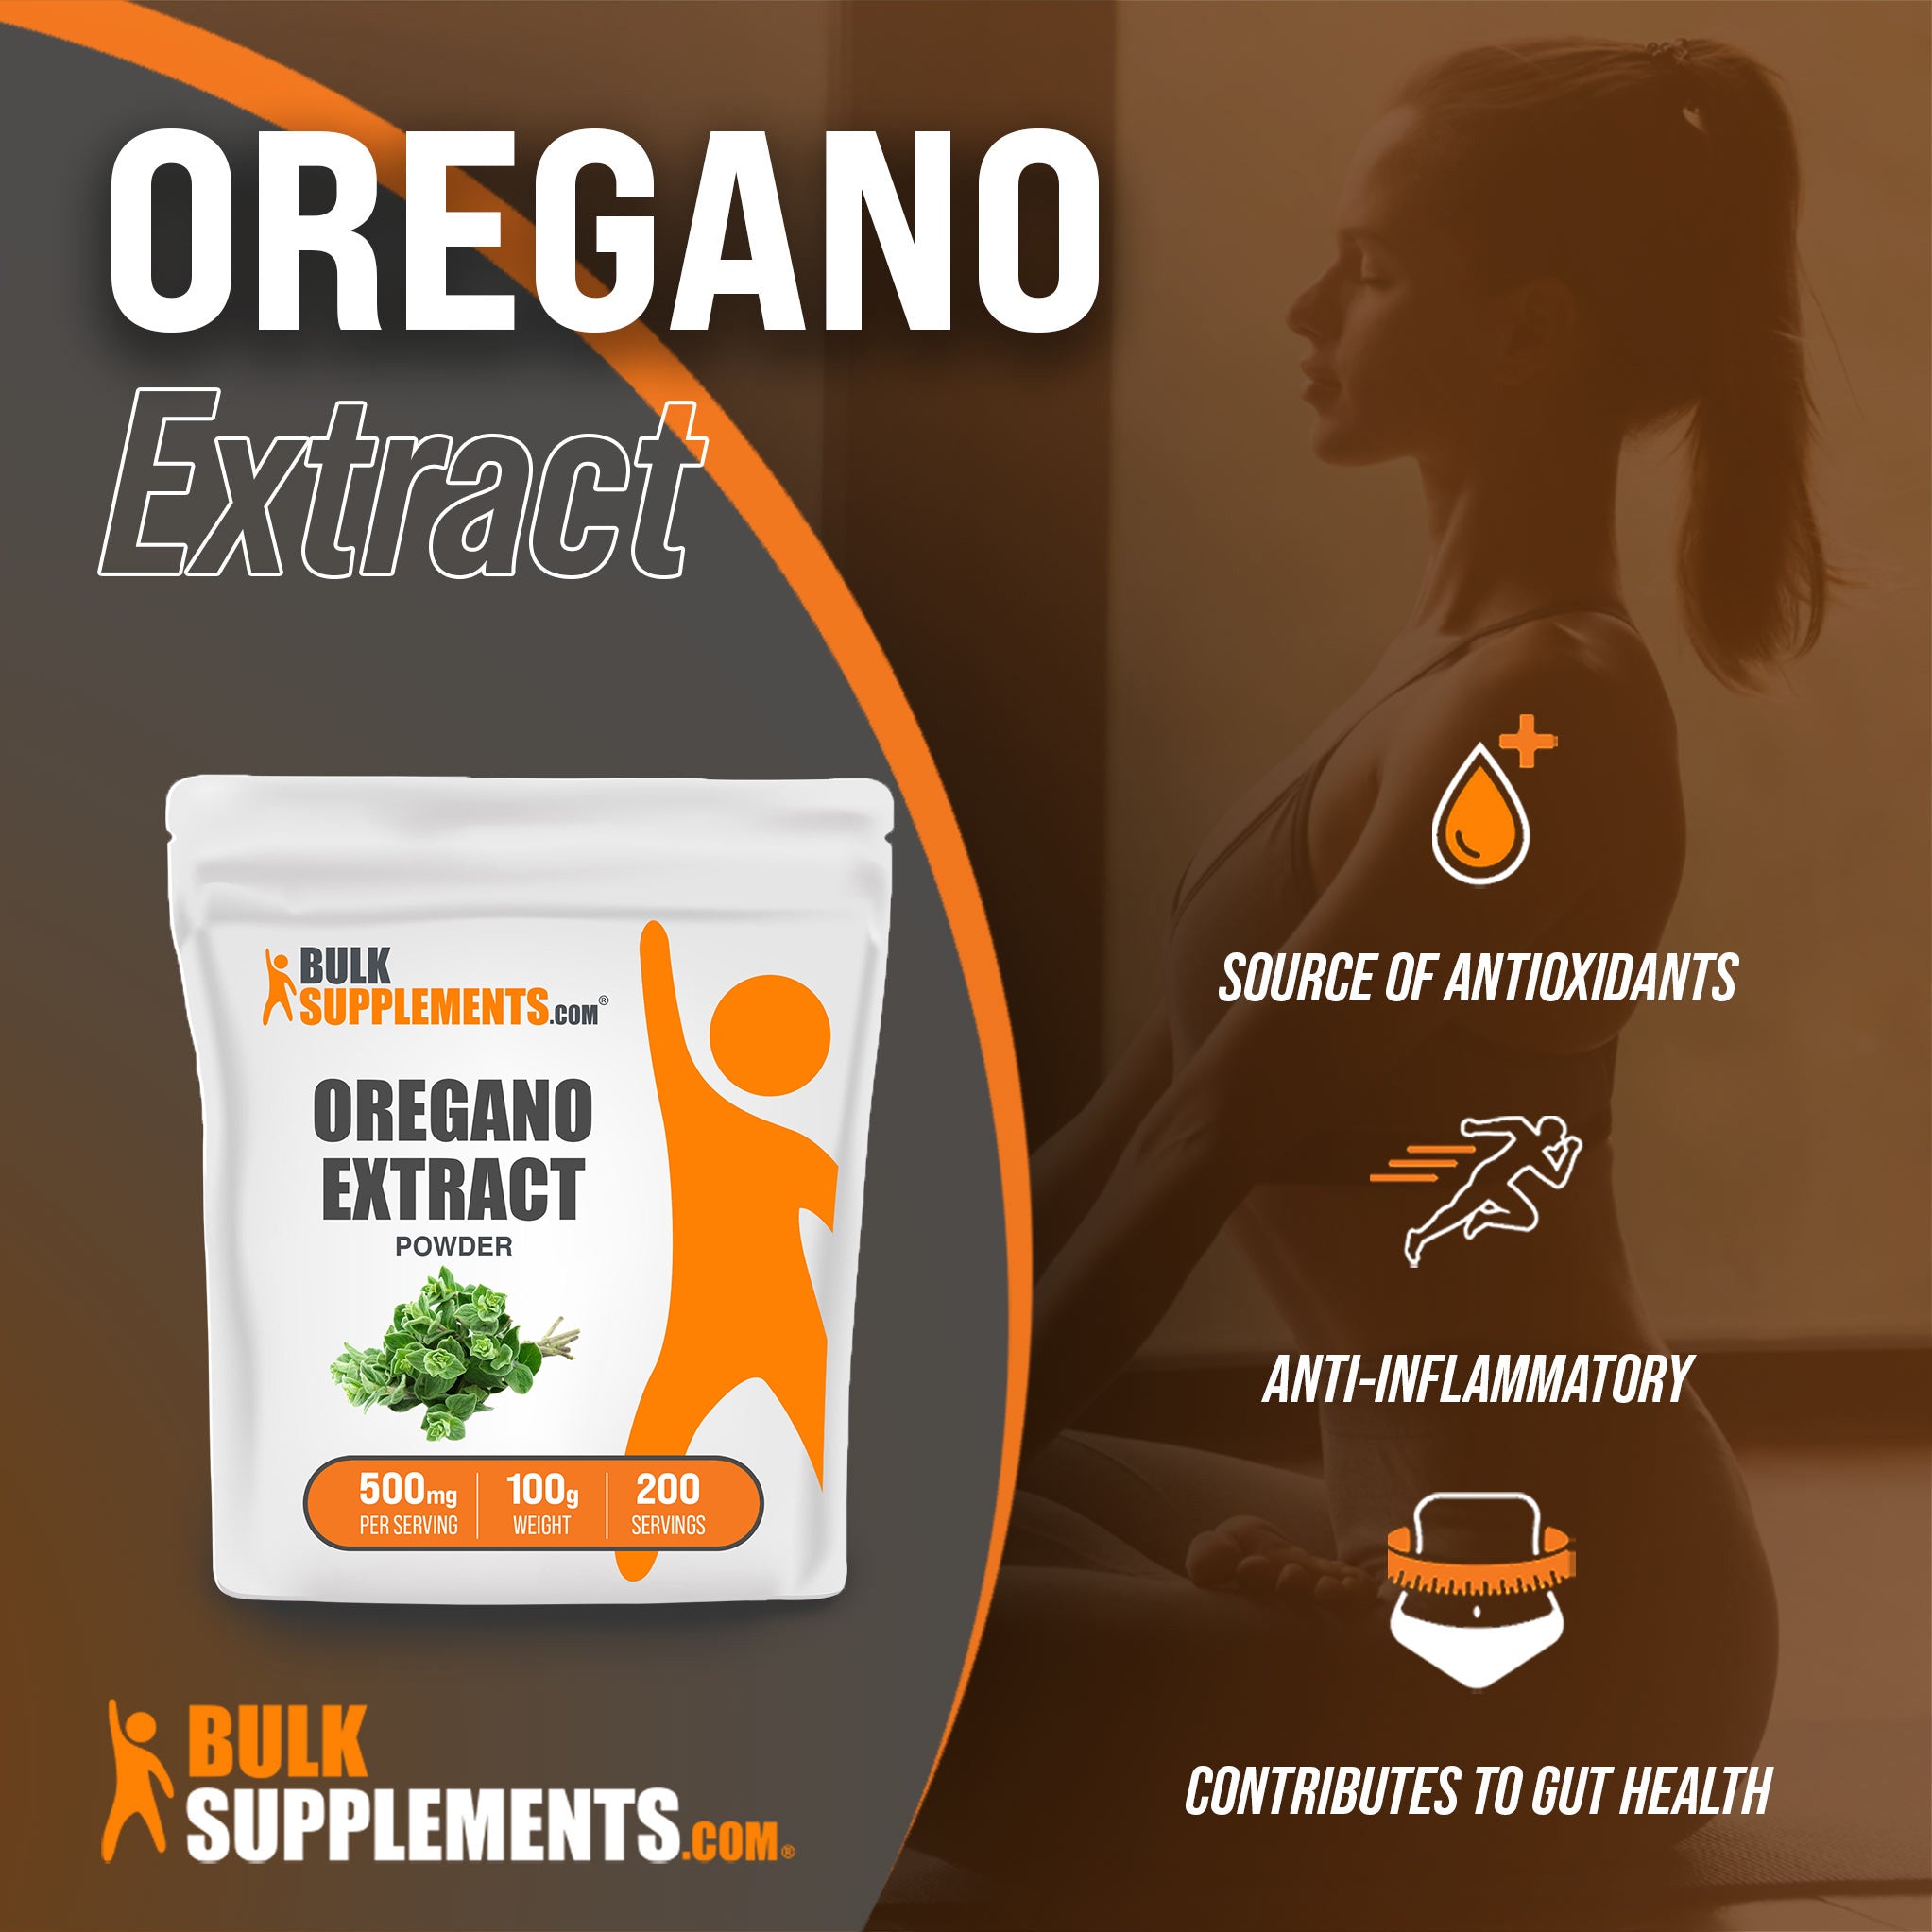 Benefits of Oregano Extract: source of antioxidants, anti-inflammatory, contributes to gut health